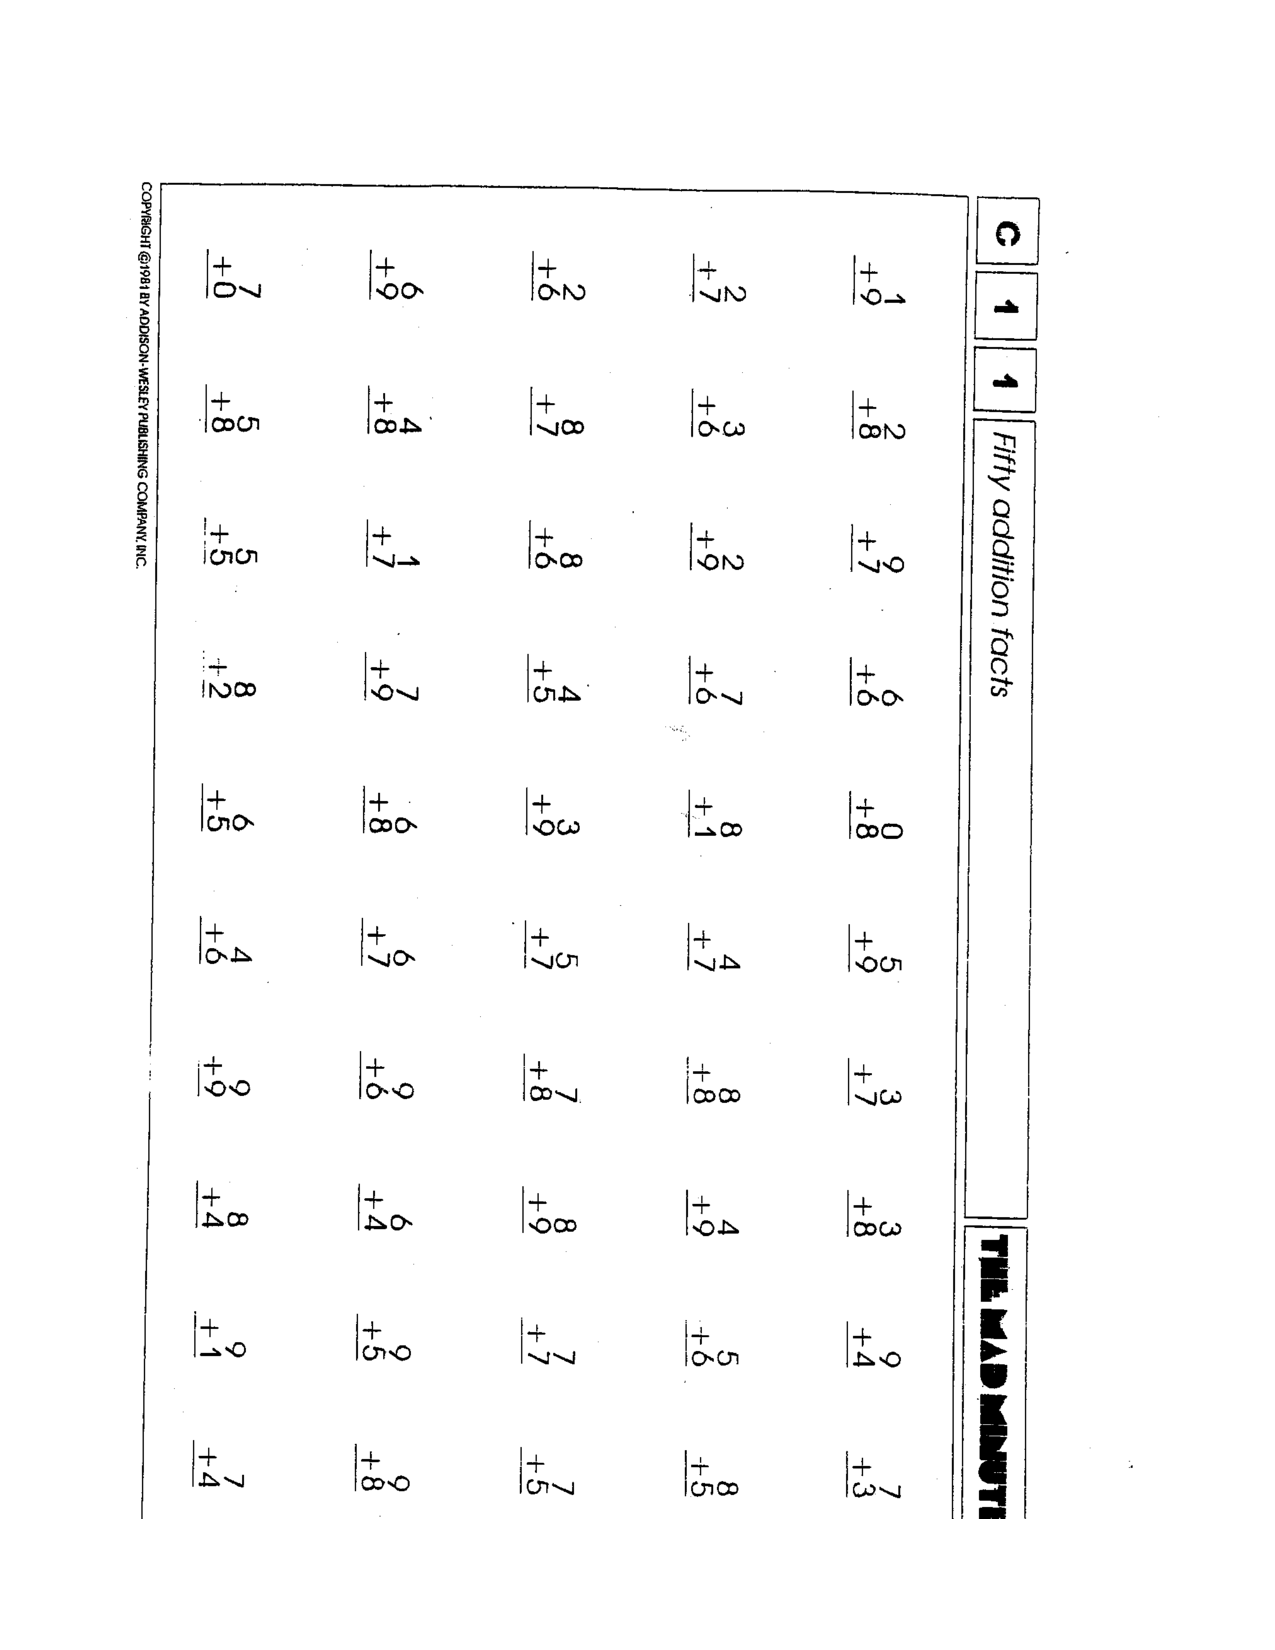 4th Grade Math Worksheets Printable Image